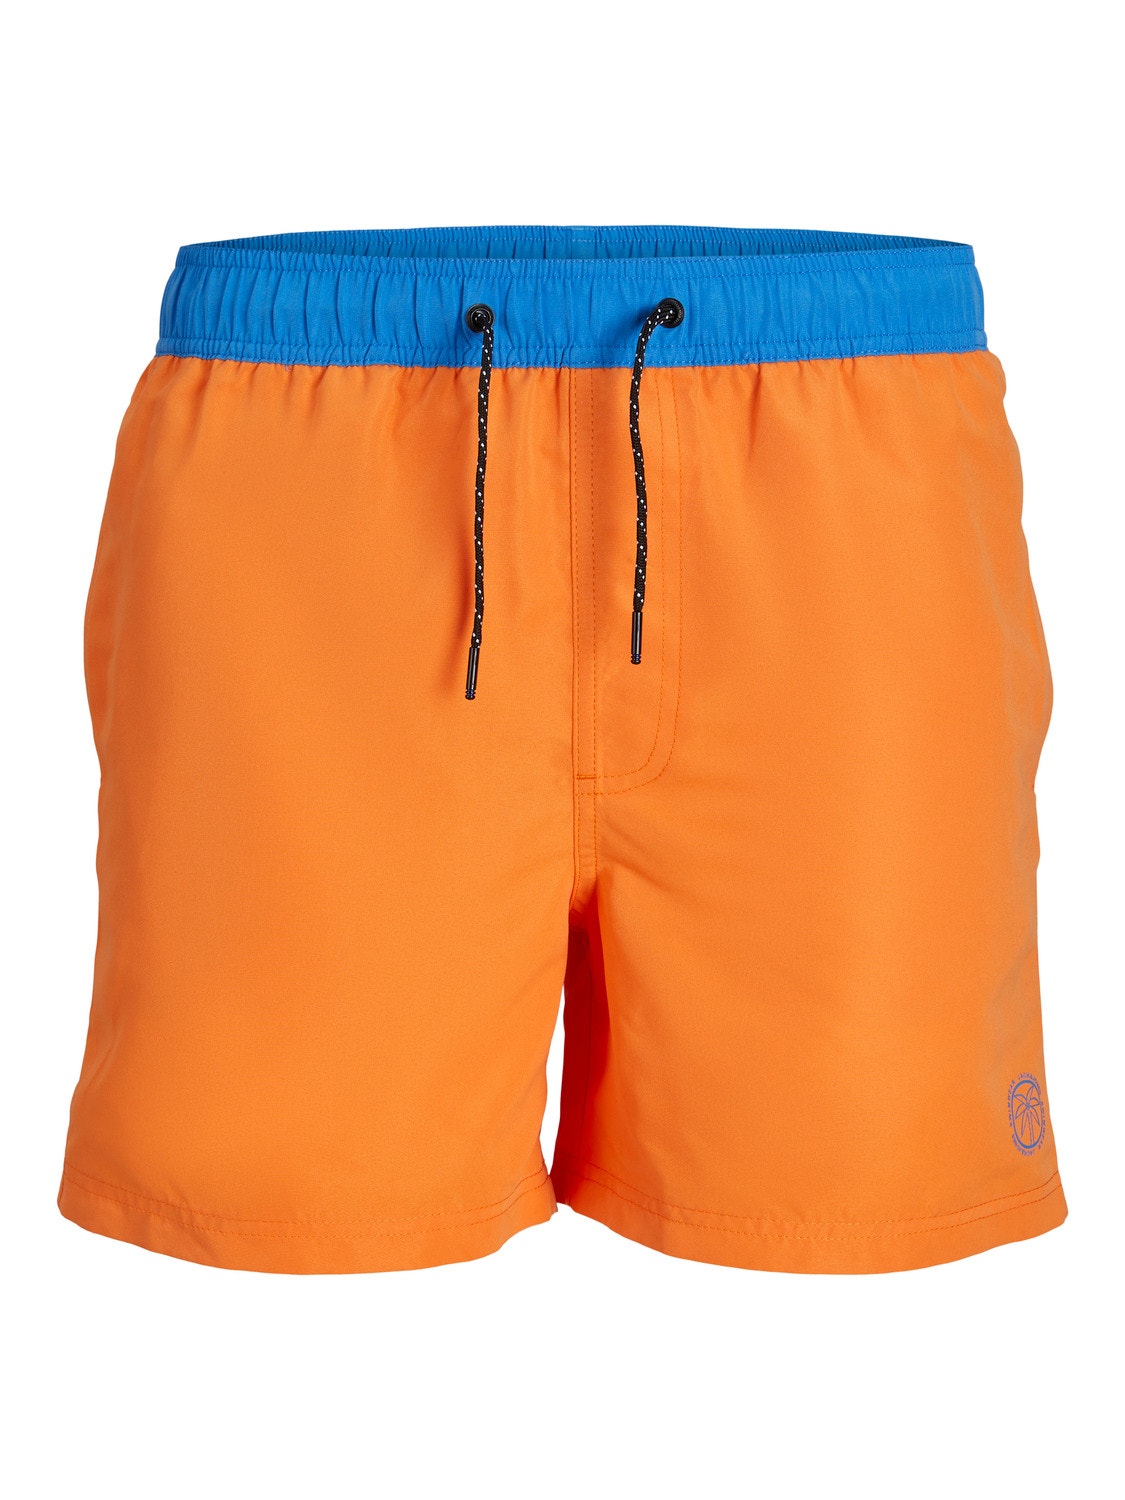 Jack & Jones Regular Fit Badeshorts -Orange Peel - 12232983